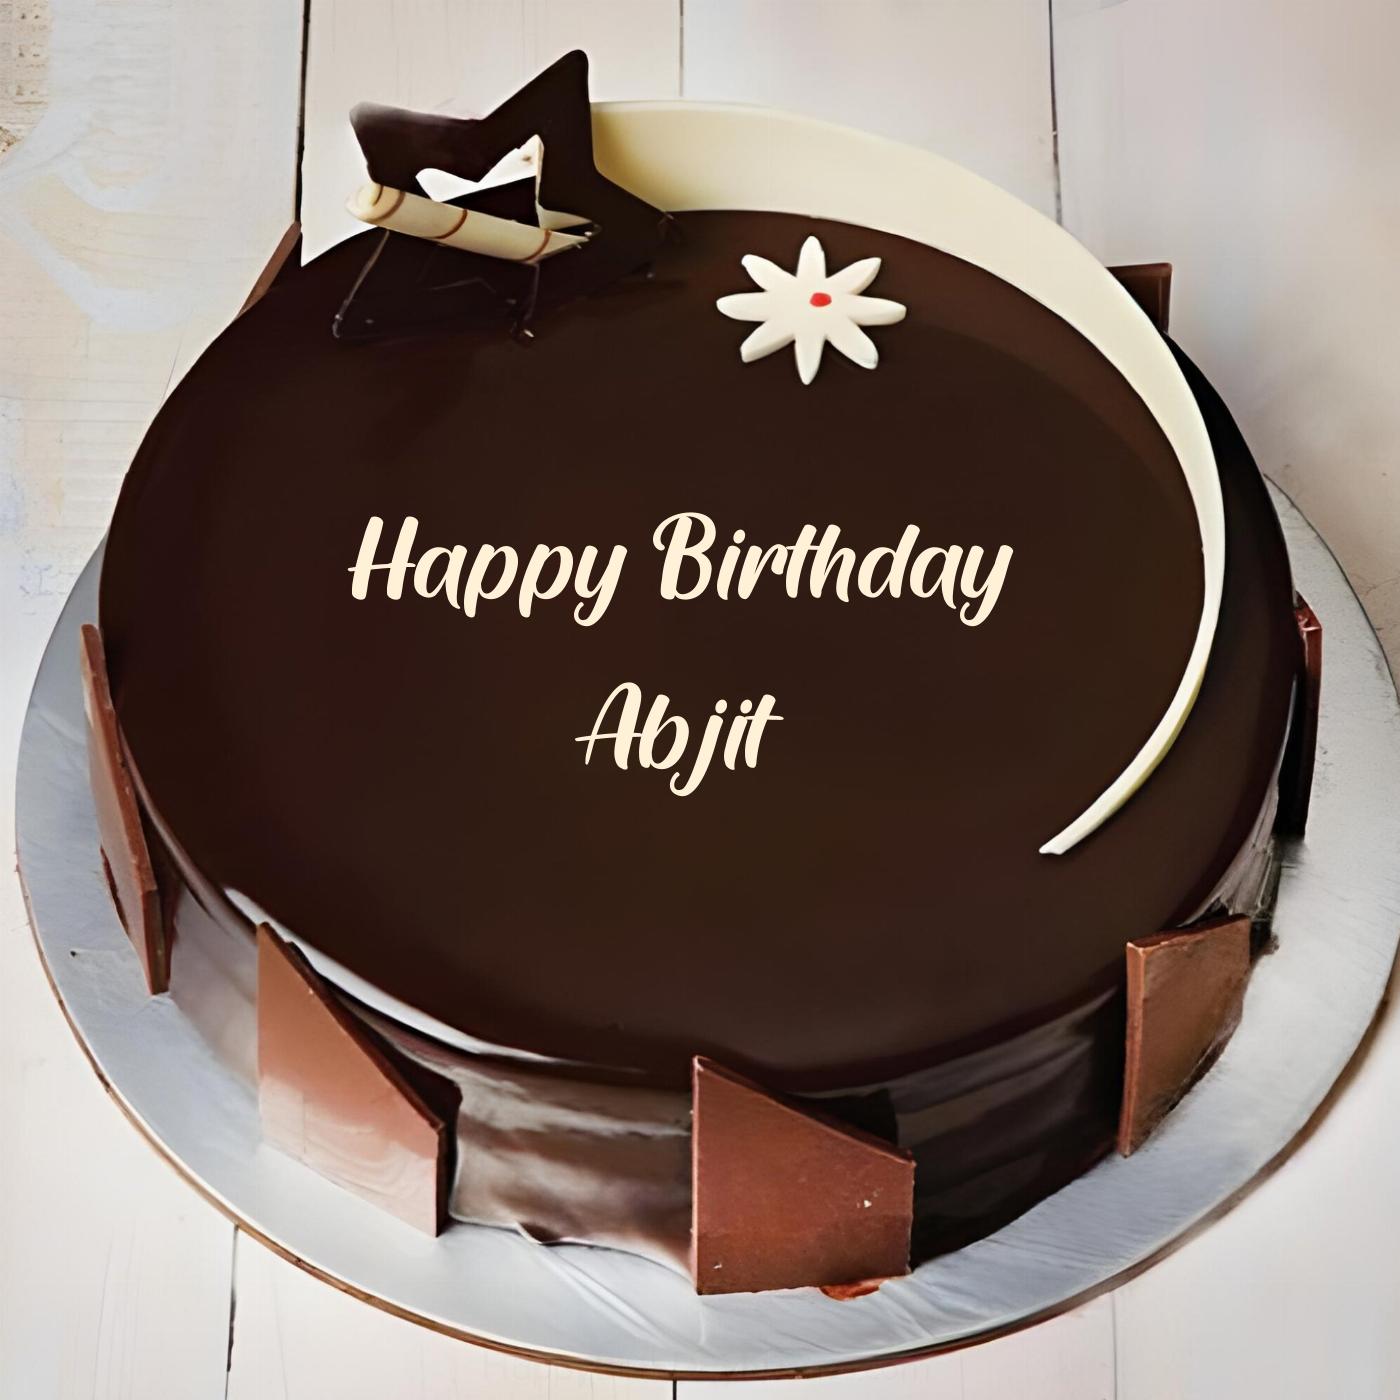 Happy Birthday Abjit Chocolate Star Cake